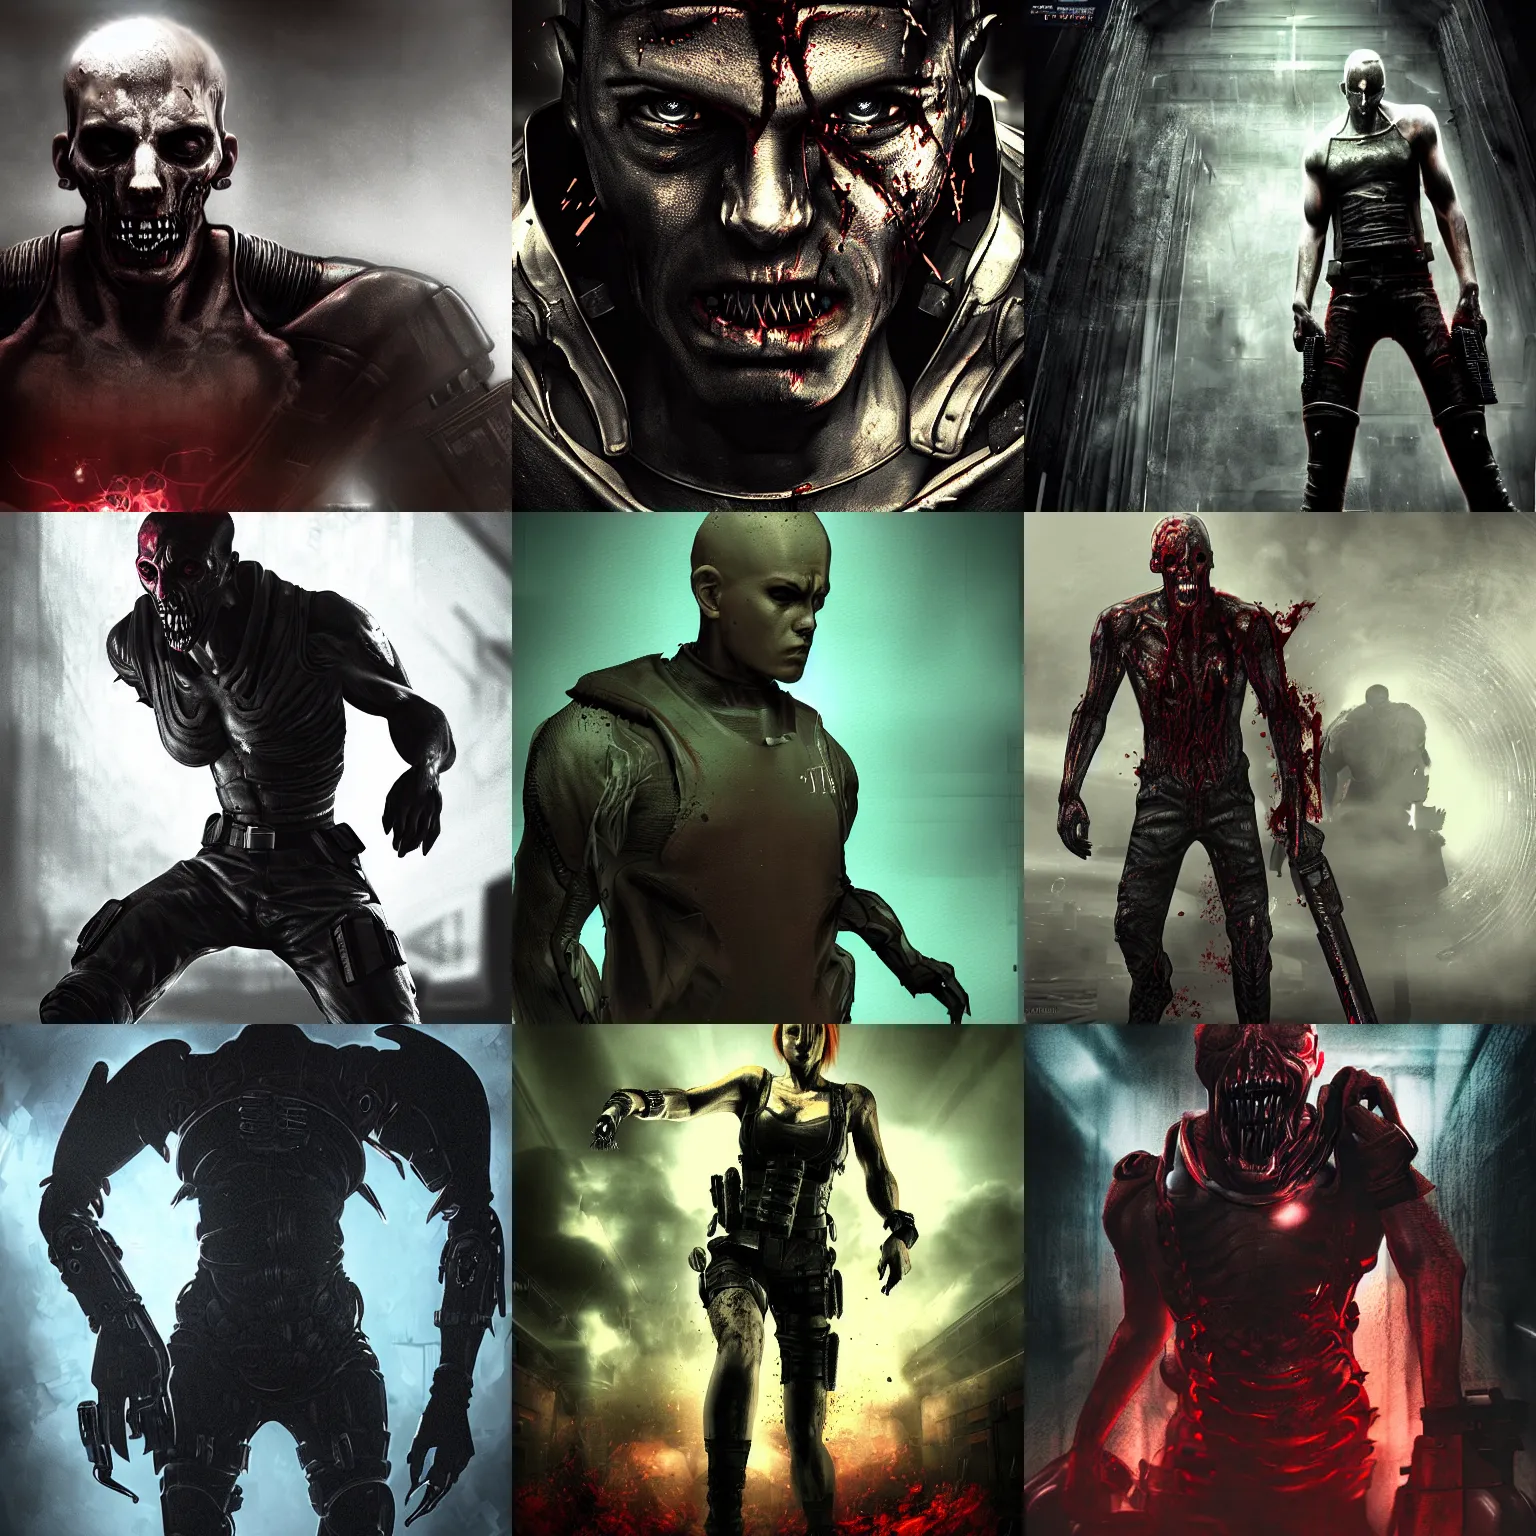 Prompt: Tyrant from Resident Evil, futuristic lab, cinematic, dramatic, digital art